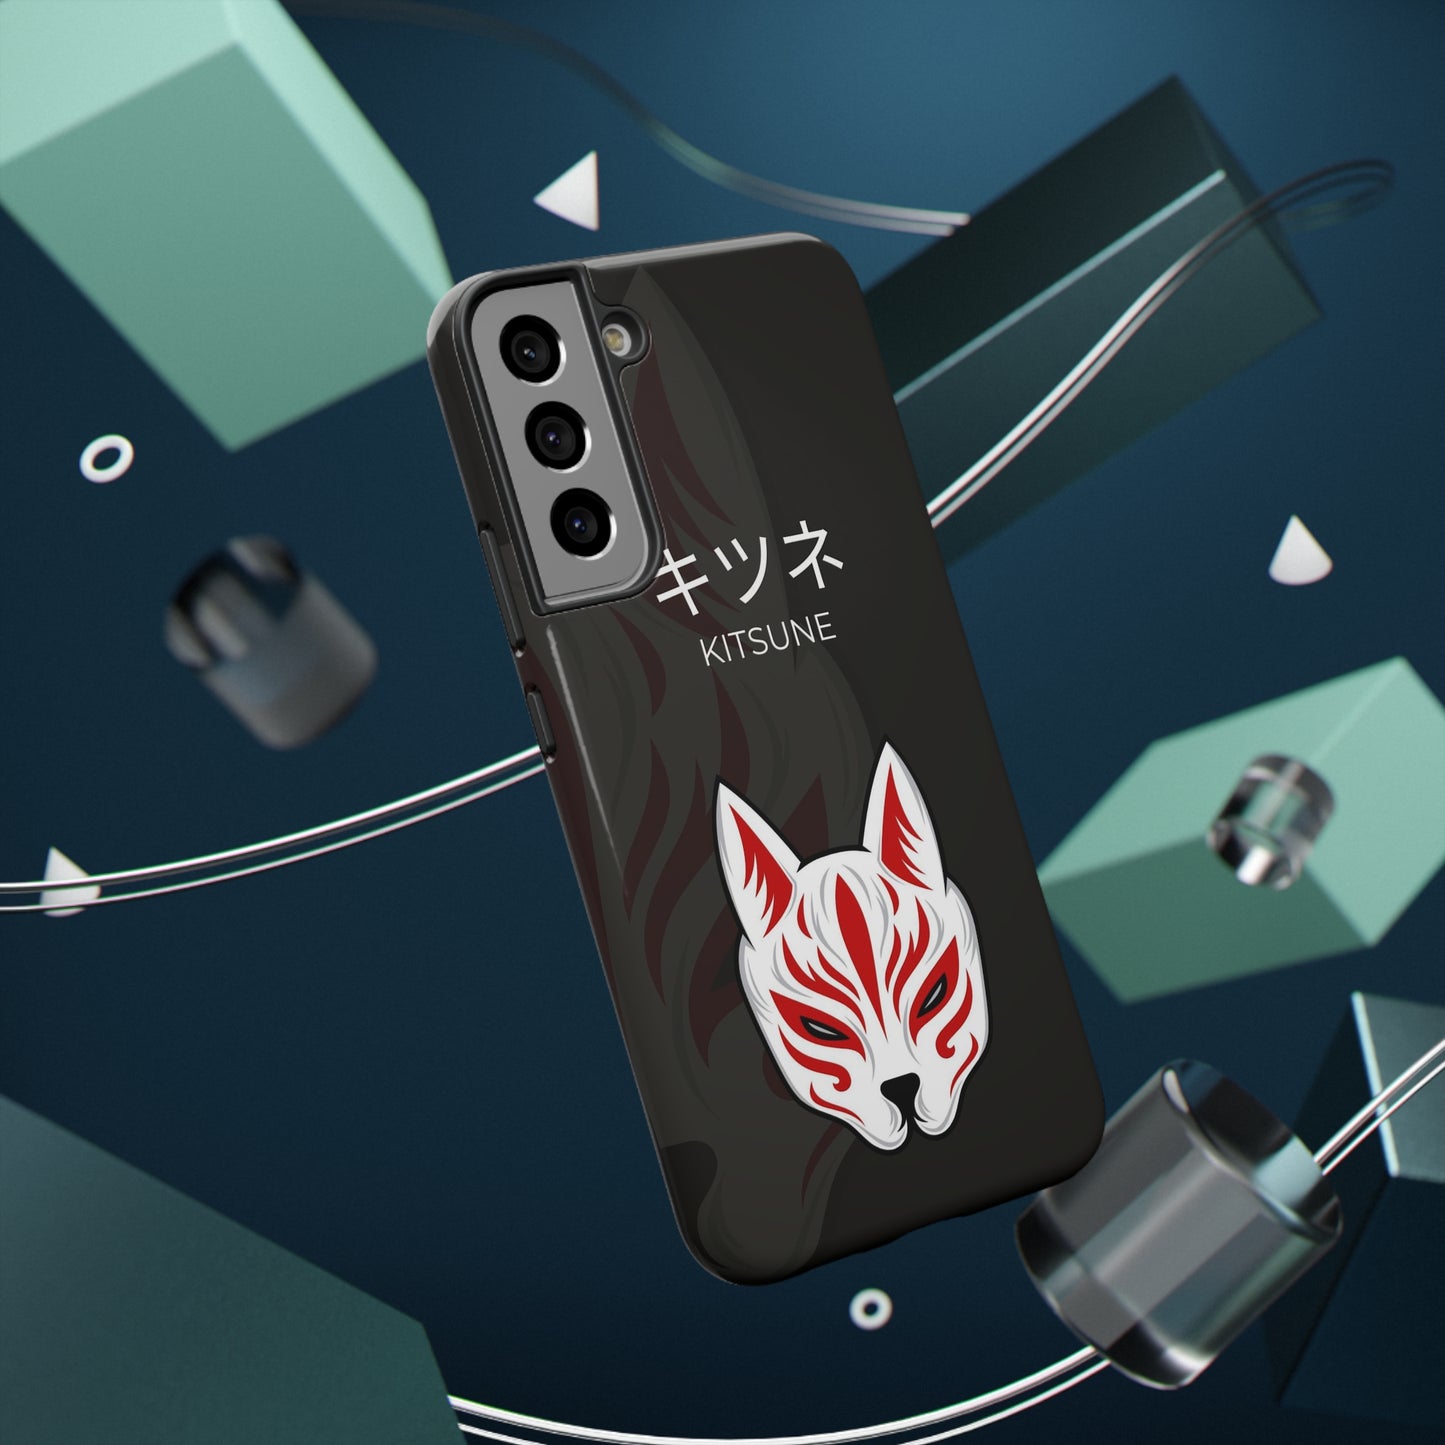 Anime Cat Impact-Resistant Phone Cases*